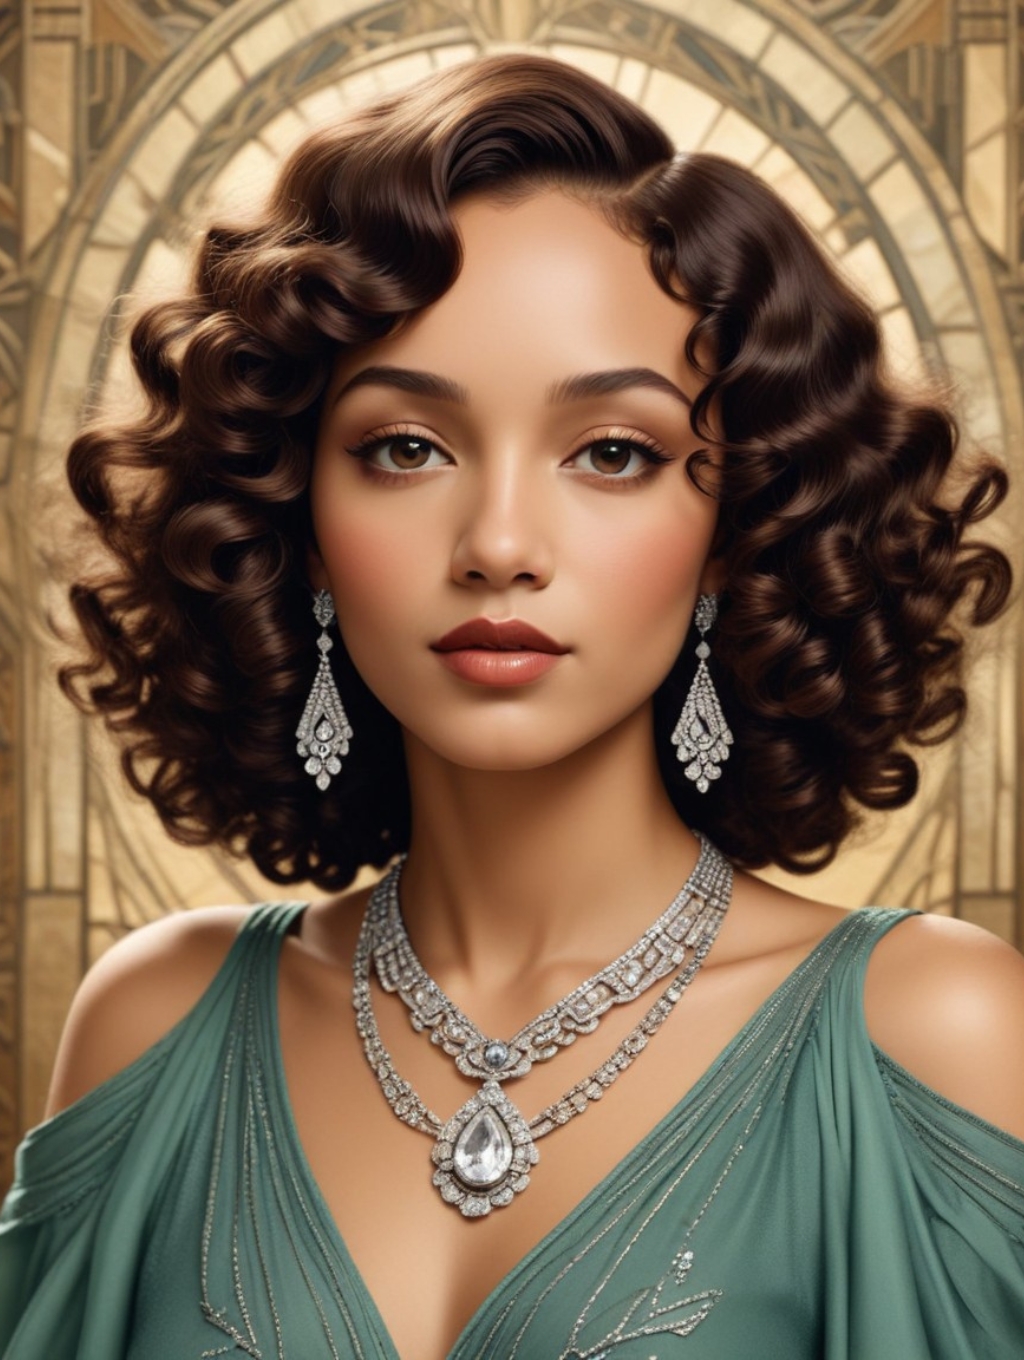 Art Deco Jewelry Women: Portrait Sketches & Headshots-Theme:5